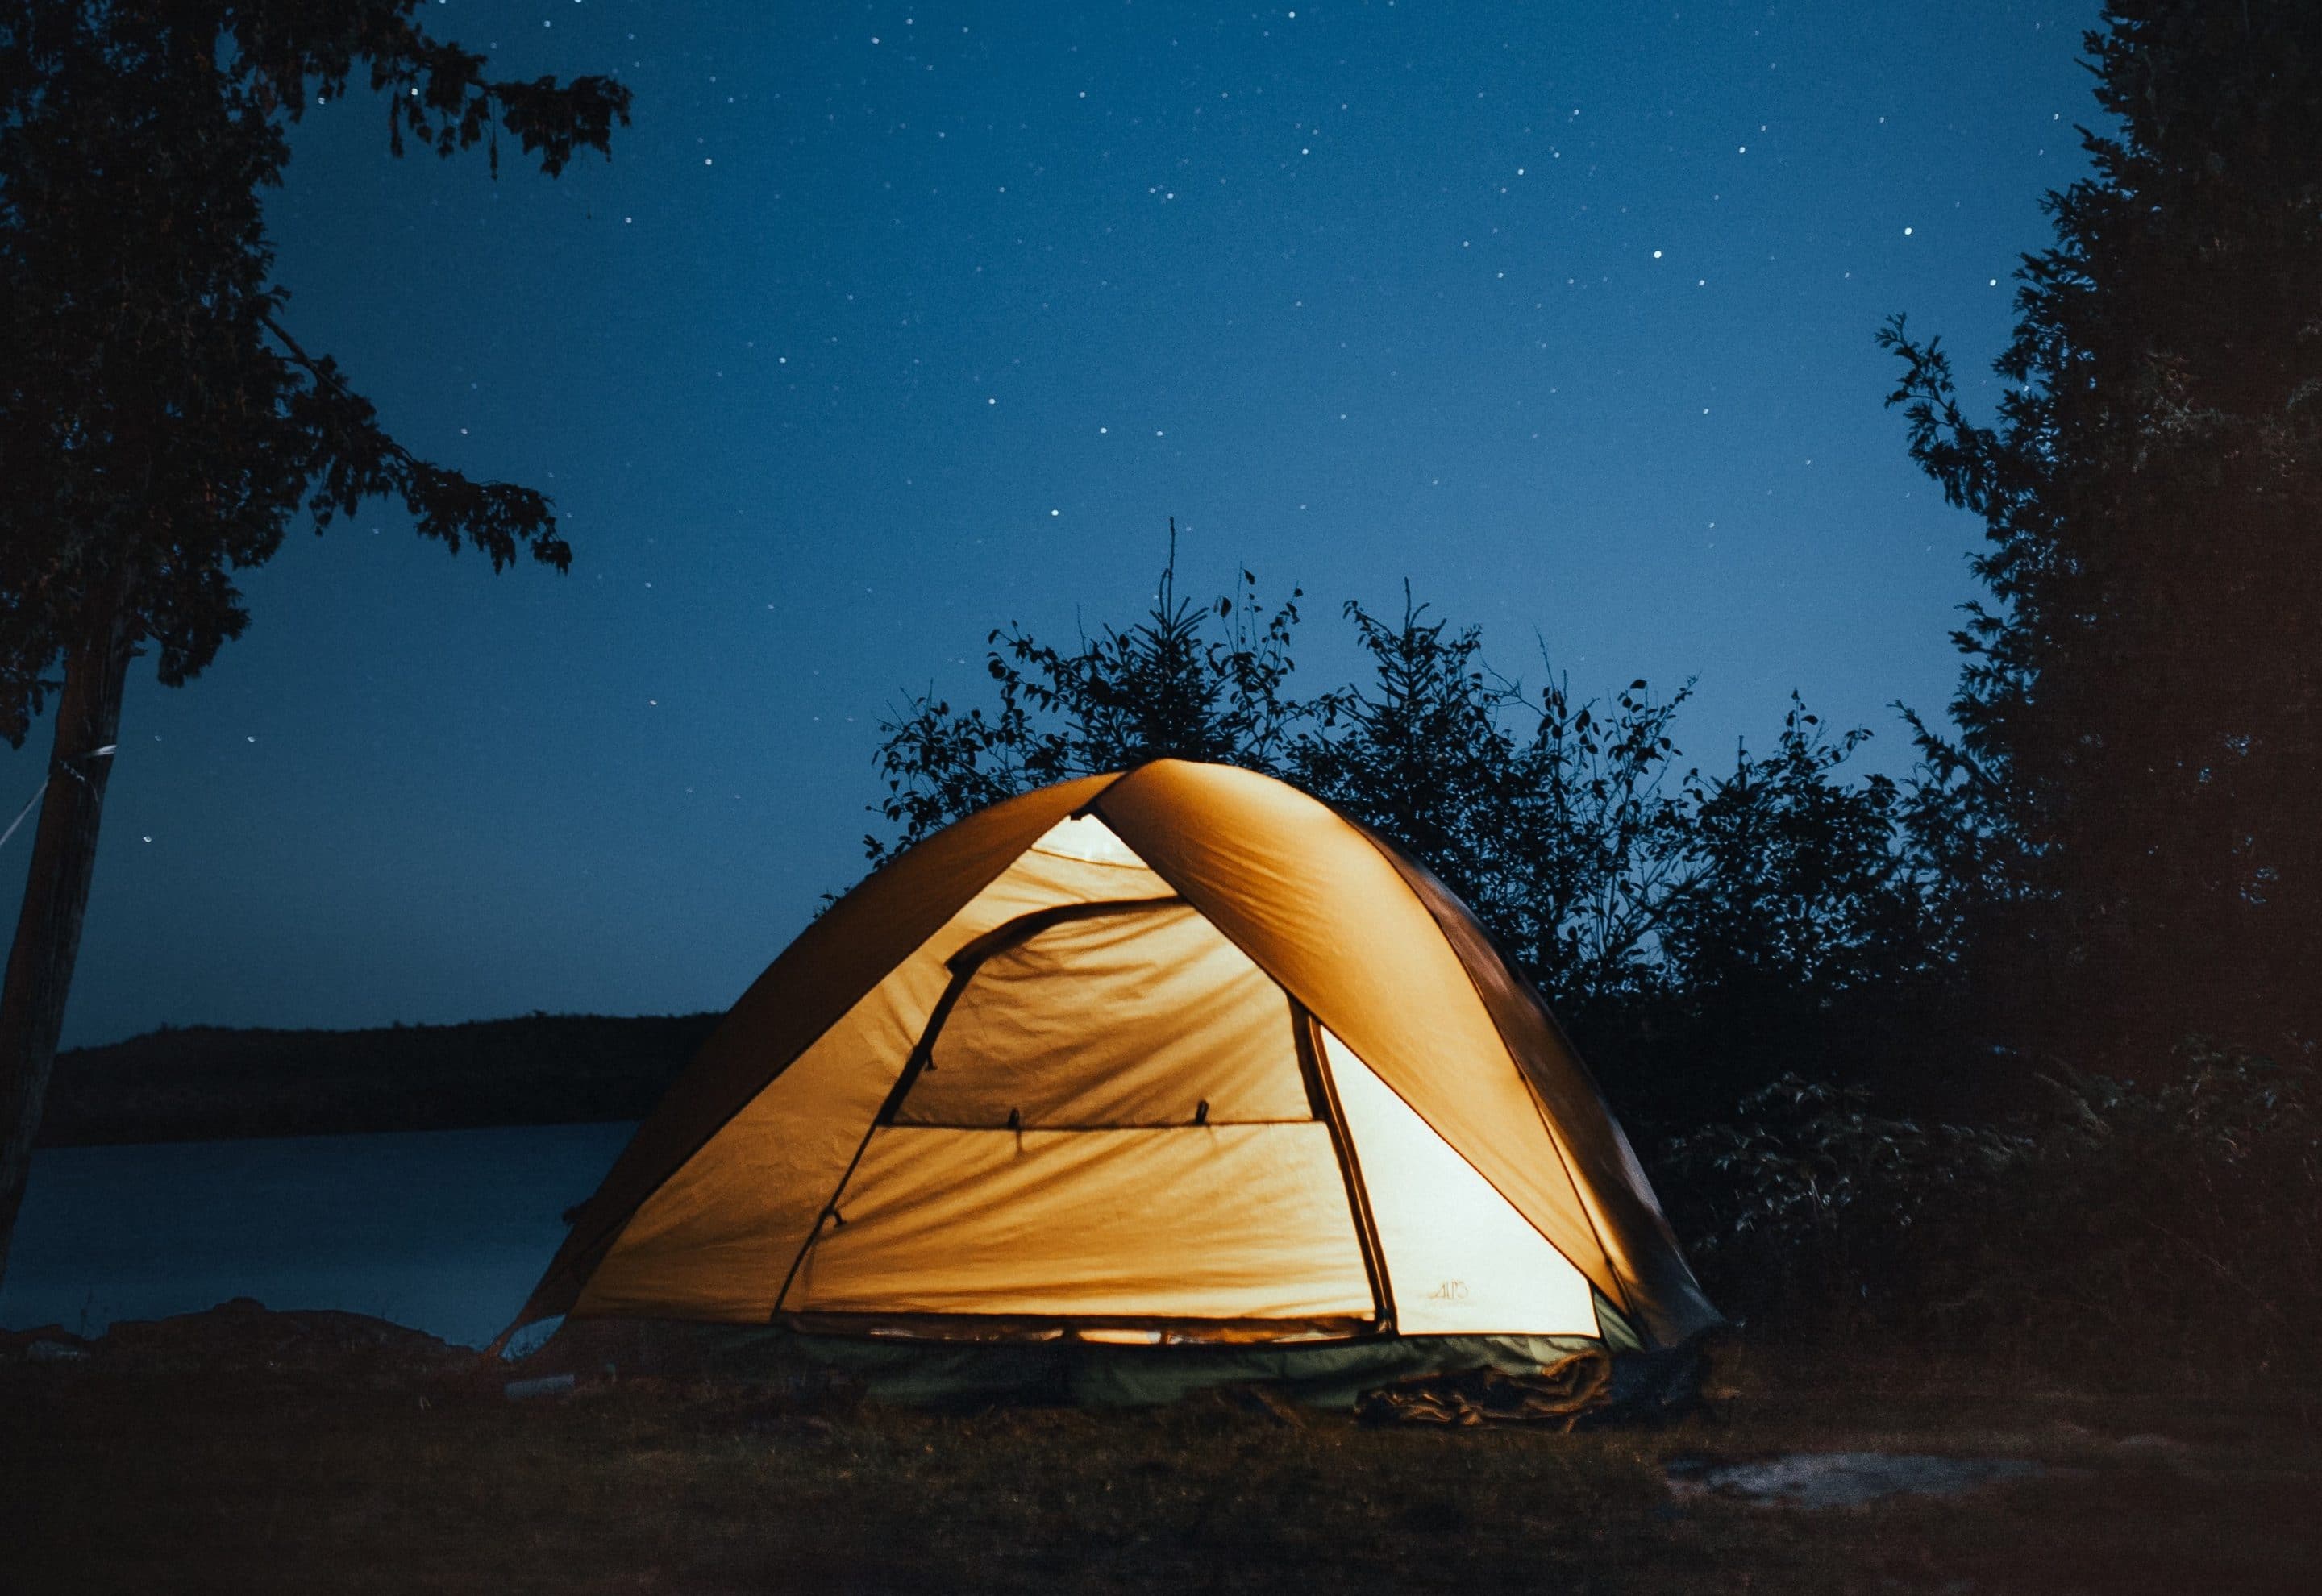 camping cpap travel sleep apnea